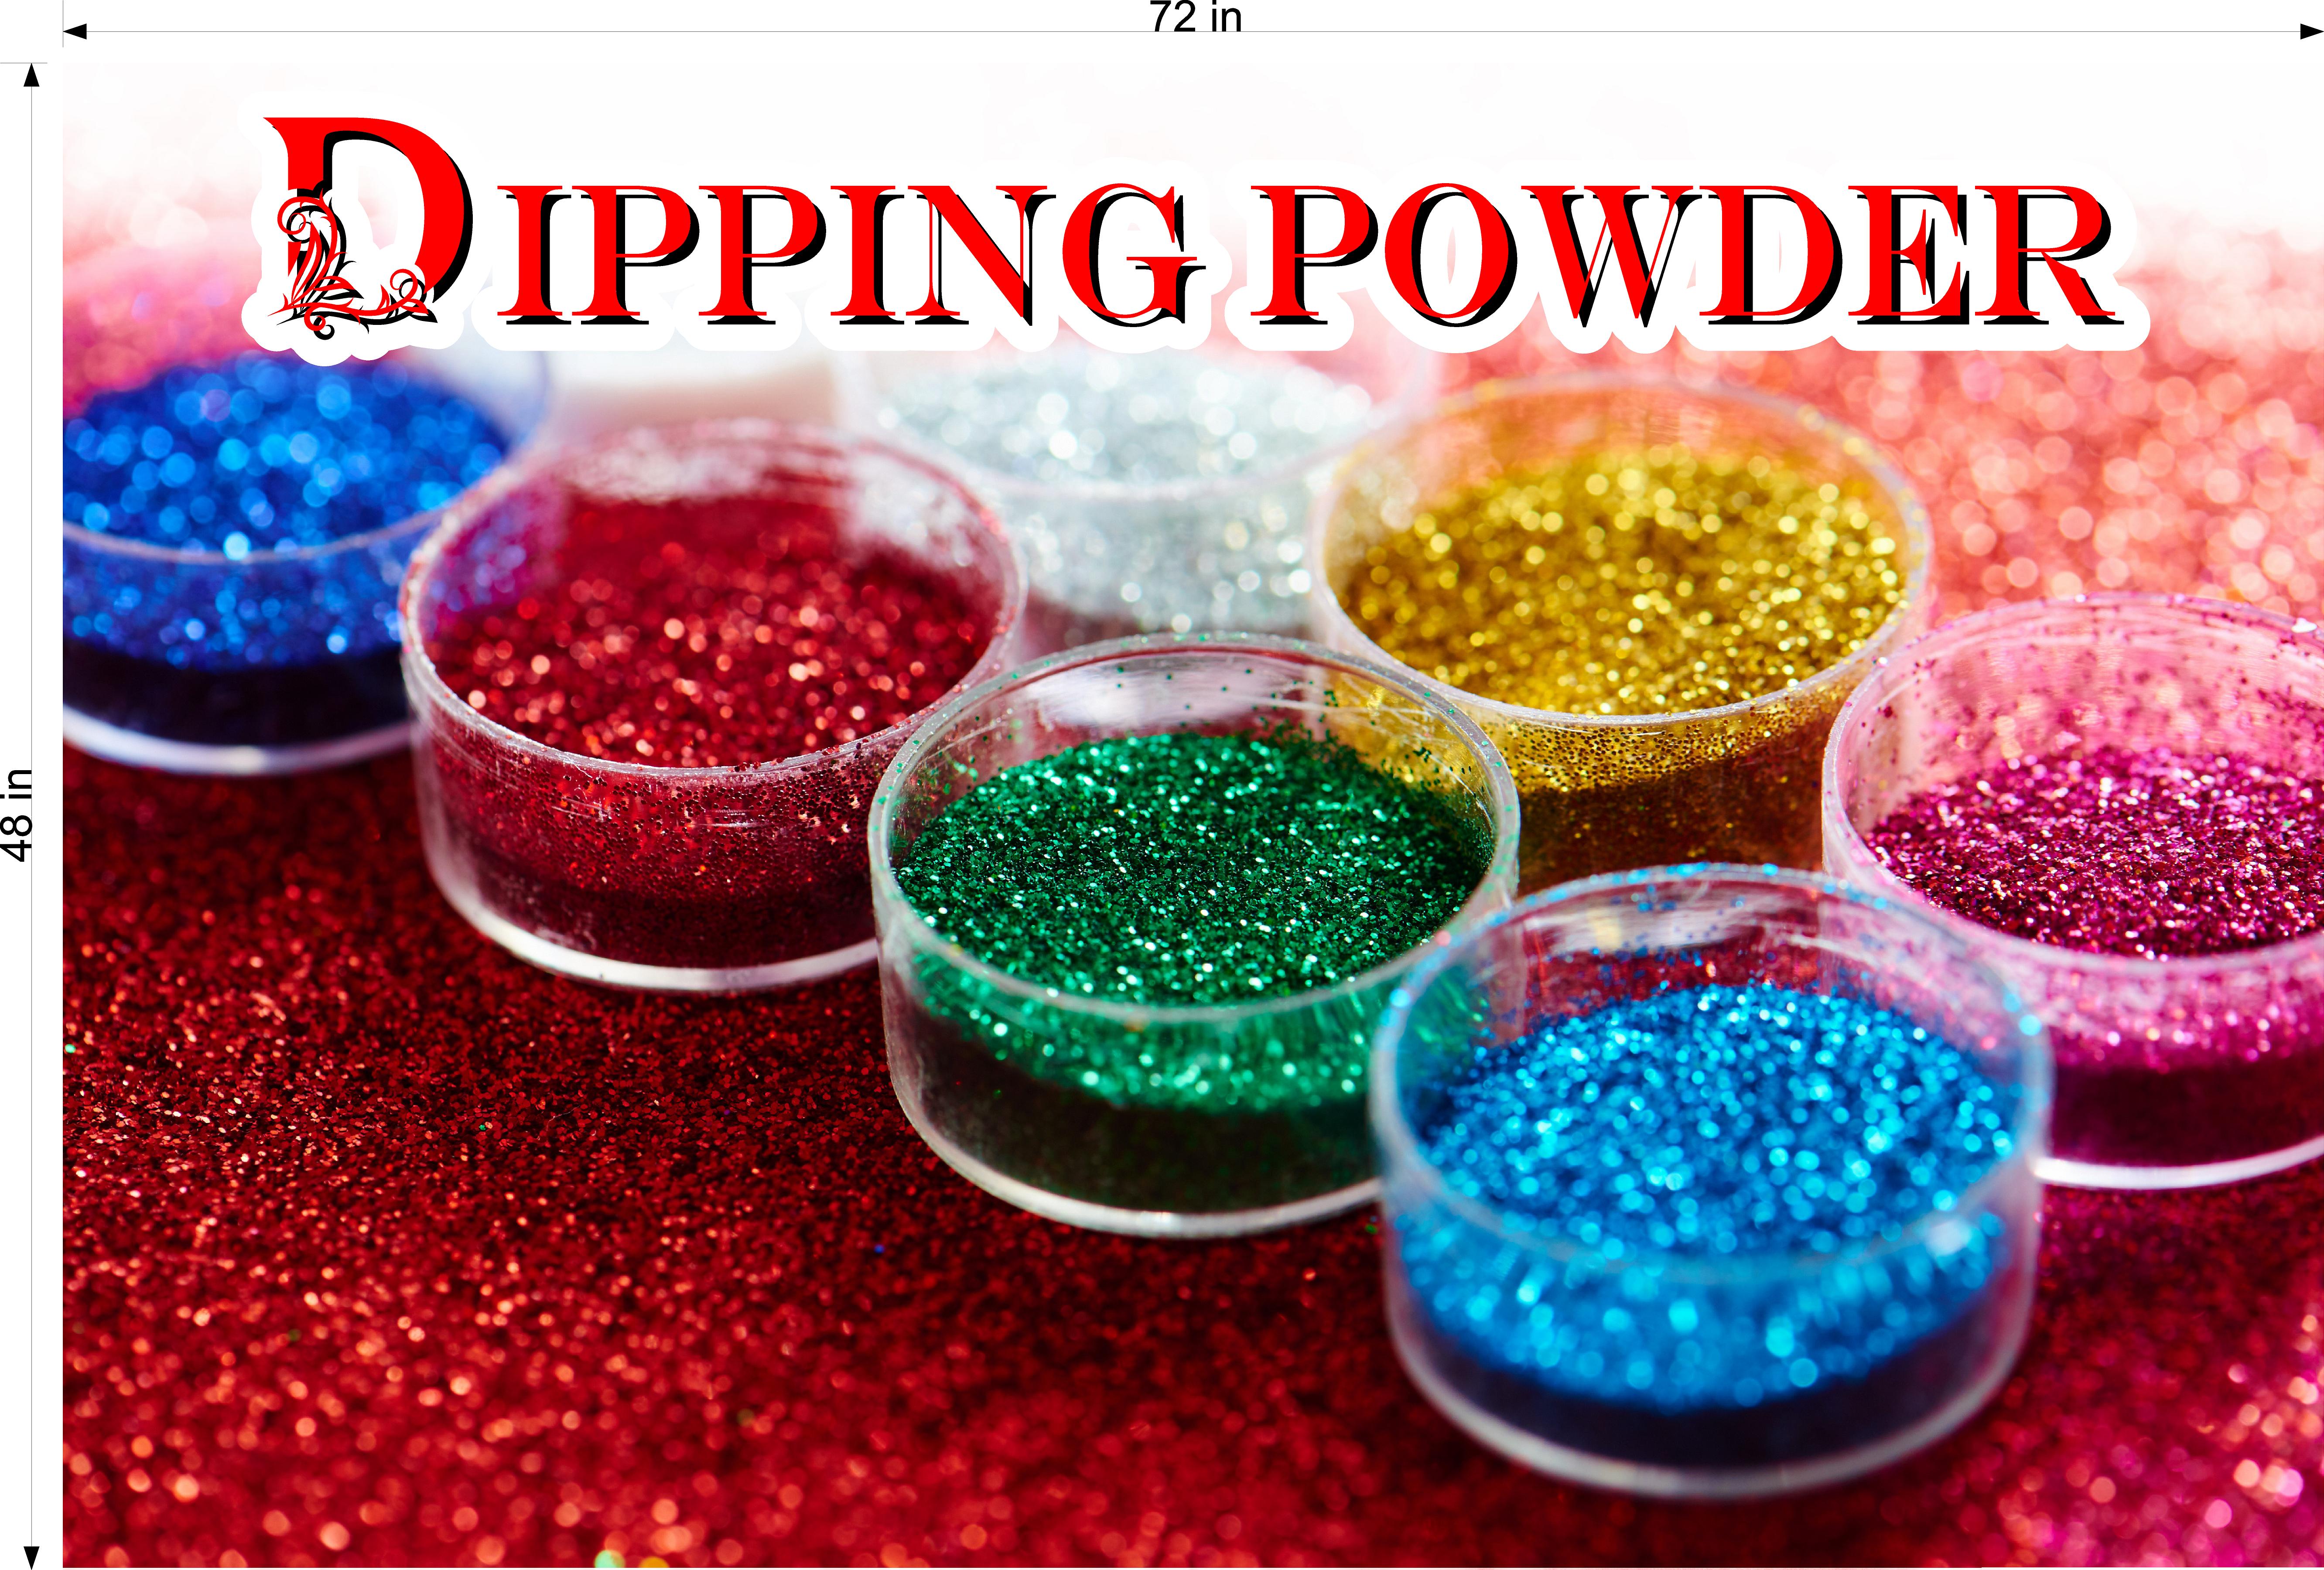 Dipping Powder 10 Photo-Realistic Paper Poster Premium Interior Inside Sign Non-Laminated Nail Salon Horizontal